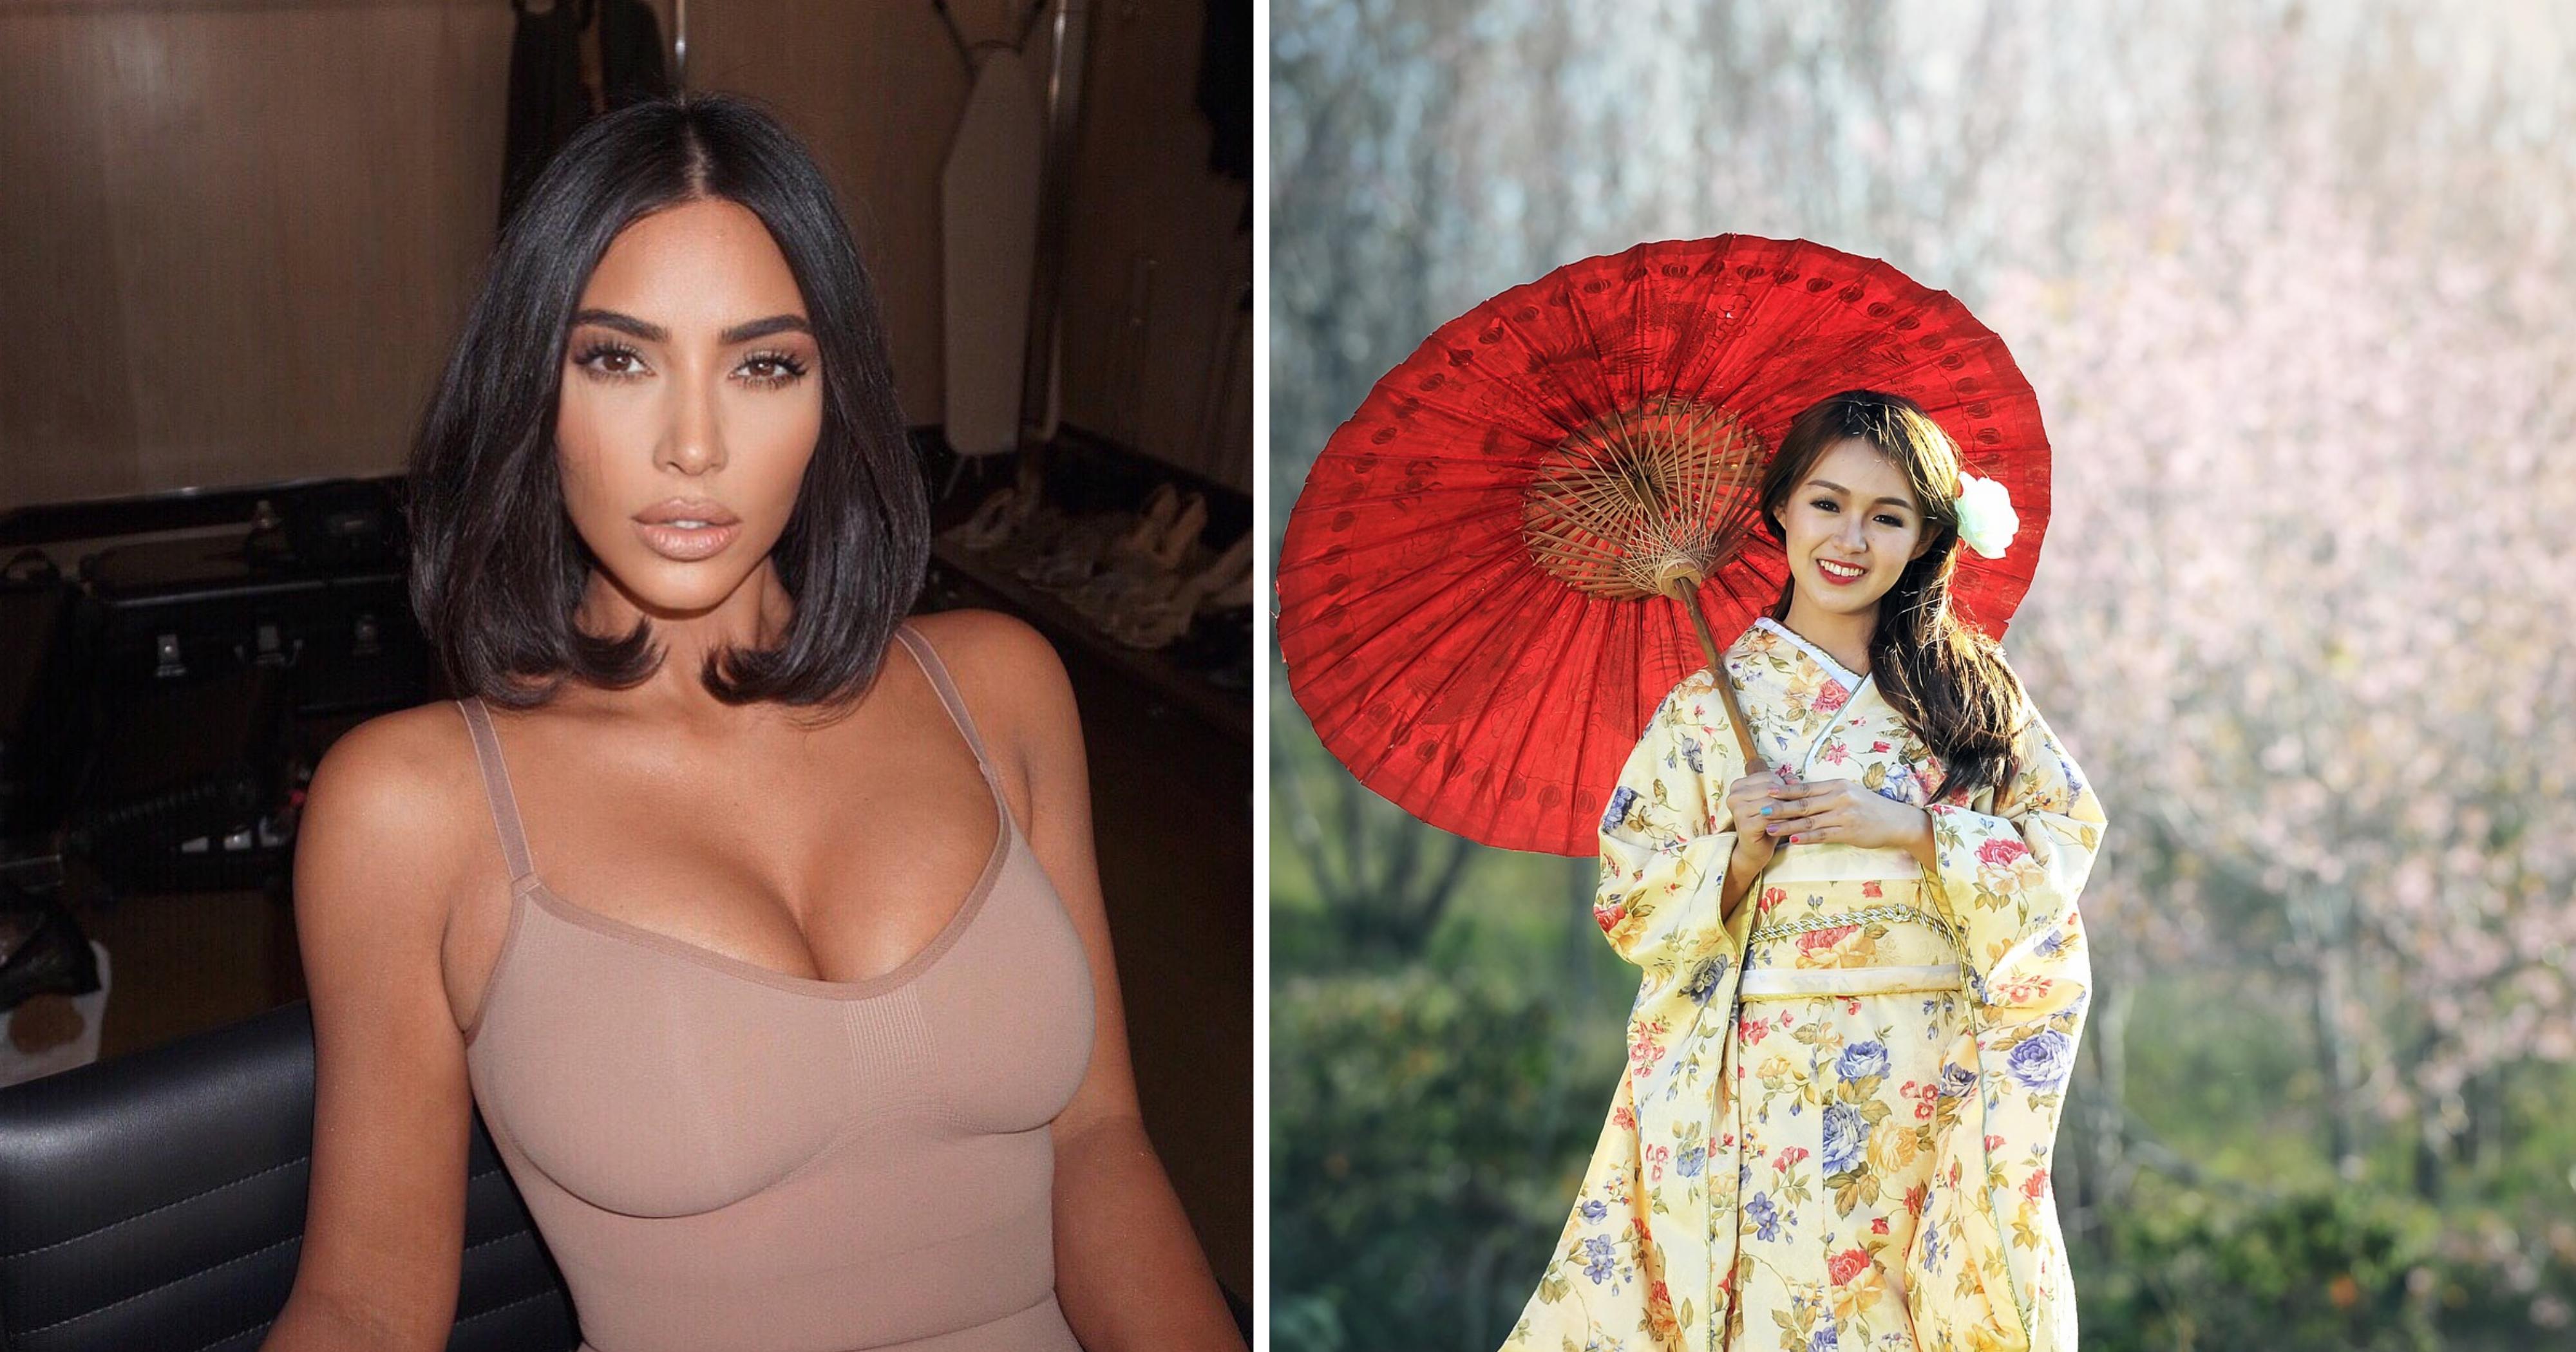 Japan outraged over Kardashian shapewear line 'Kimono